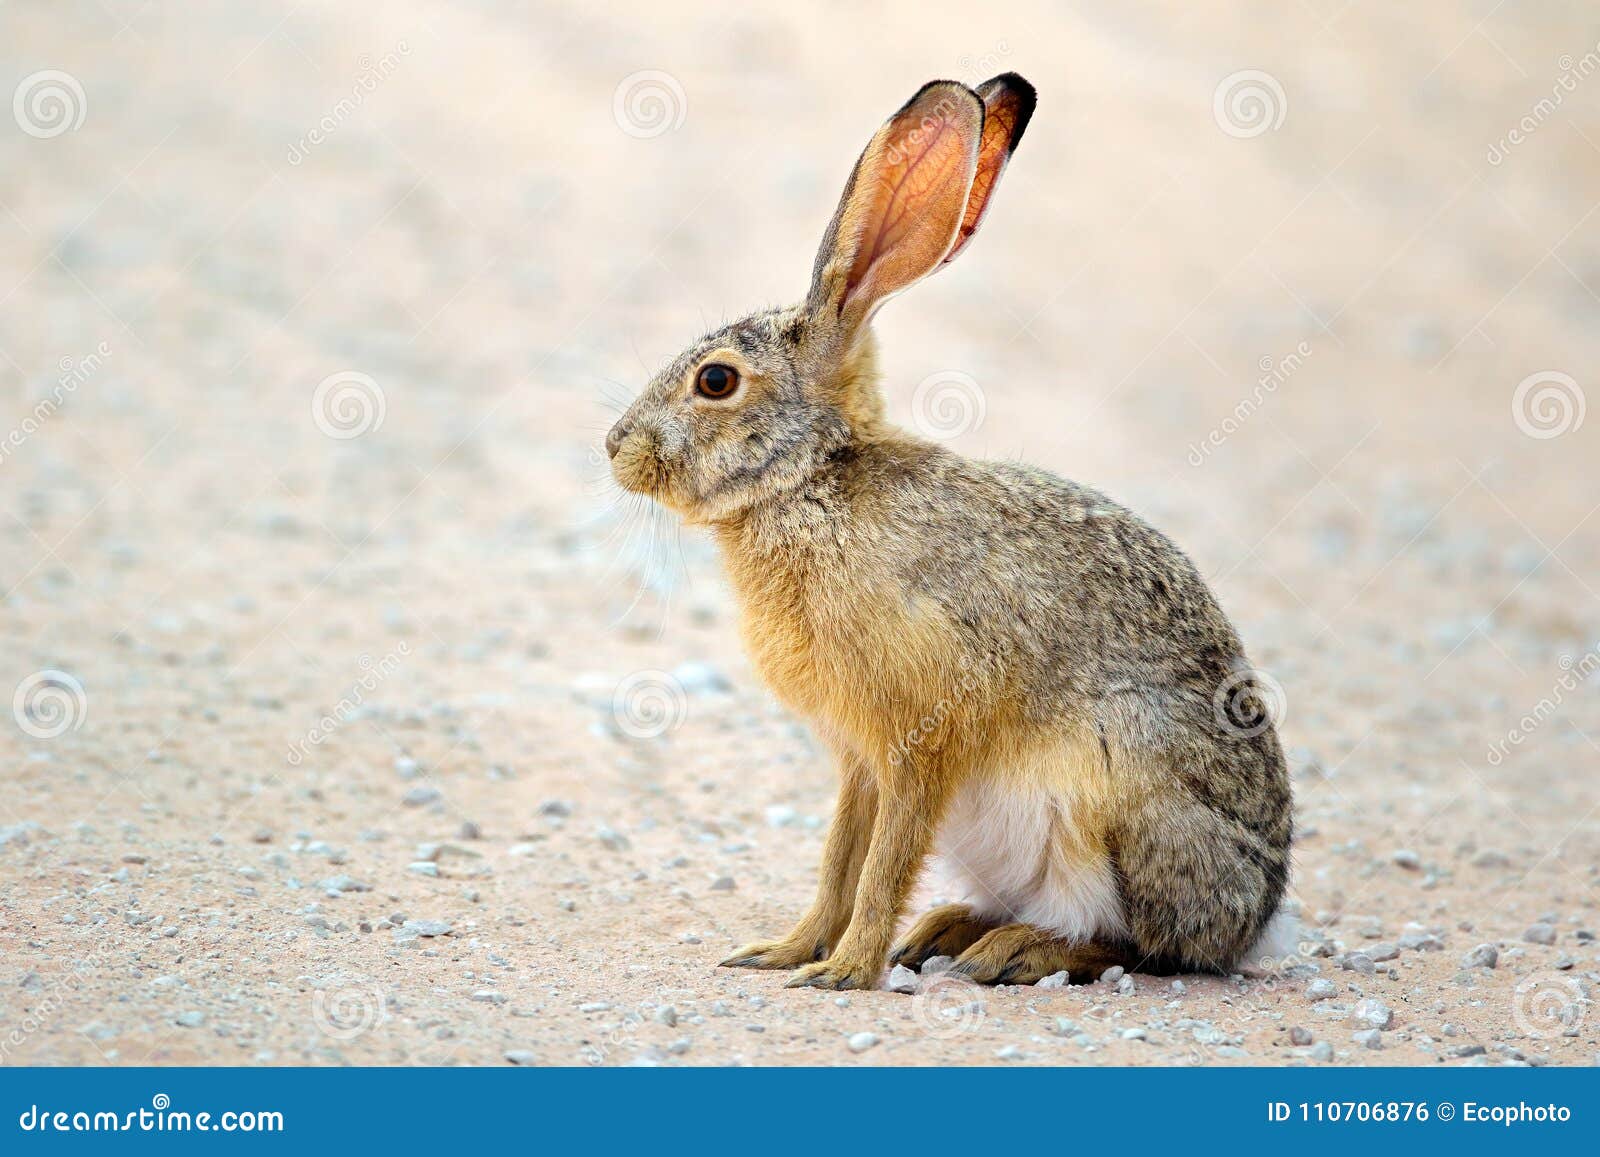 alert scrub hare